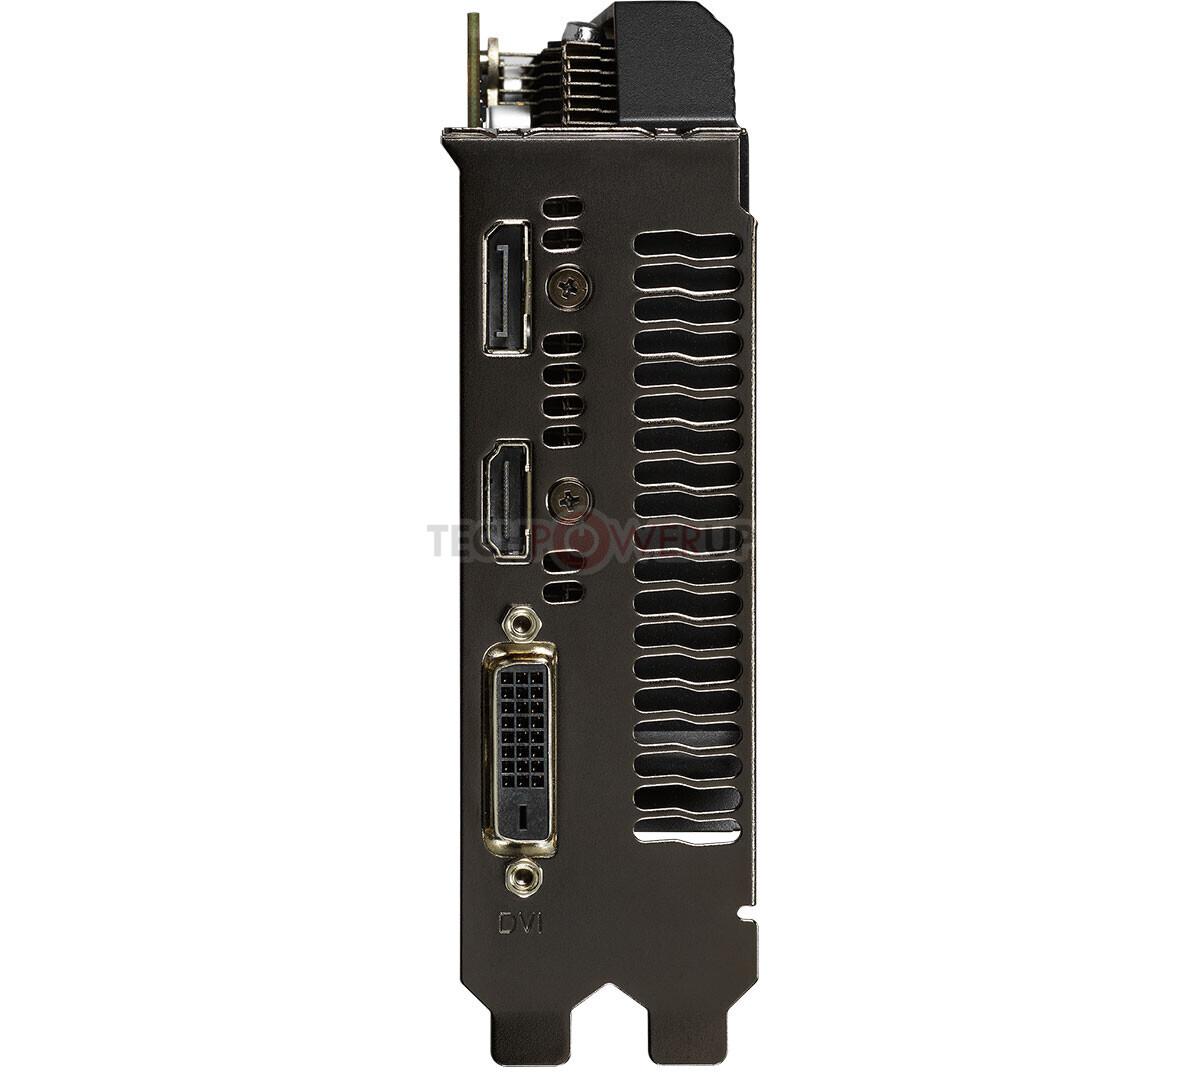 Asus выпустила видеокарту GeForce RTX 2060 DUAL Mini для конкуренции с radeon RX 5600 XT